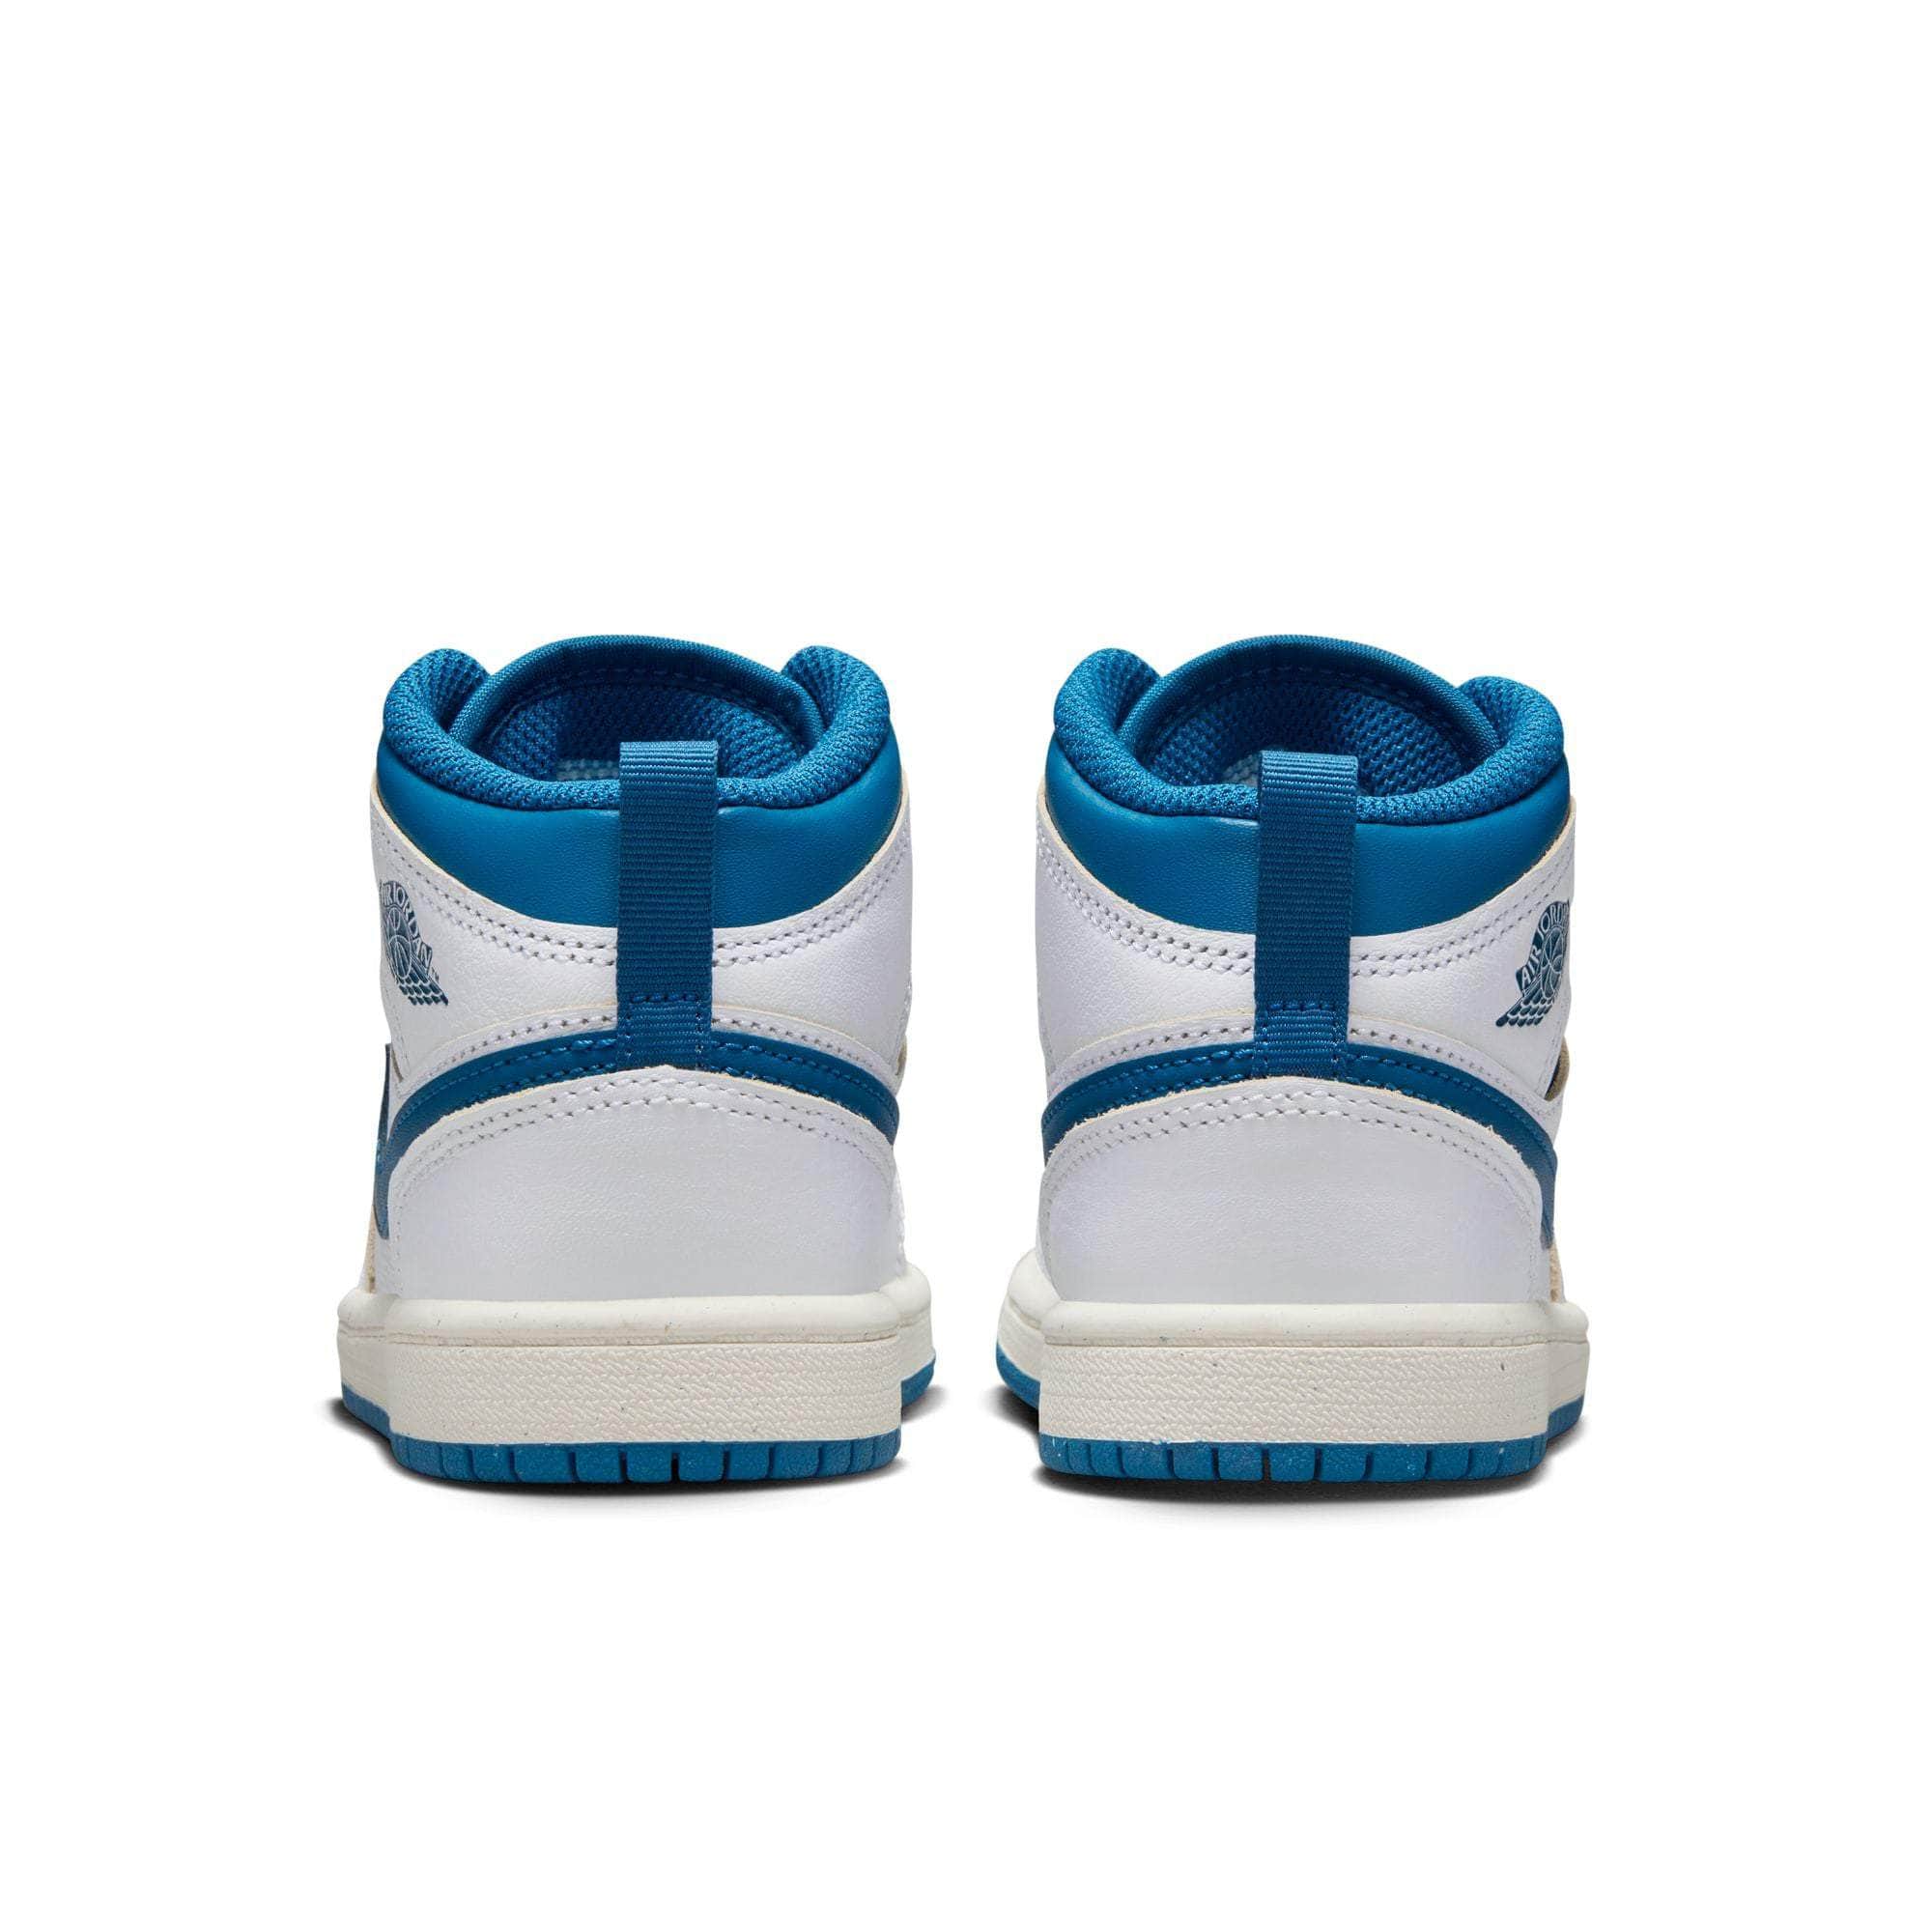 Air Jordan Footwear Air Jordan 1 Mid SE "Industrial Blue" - Kid's PS